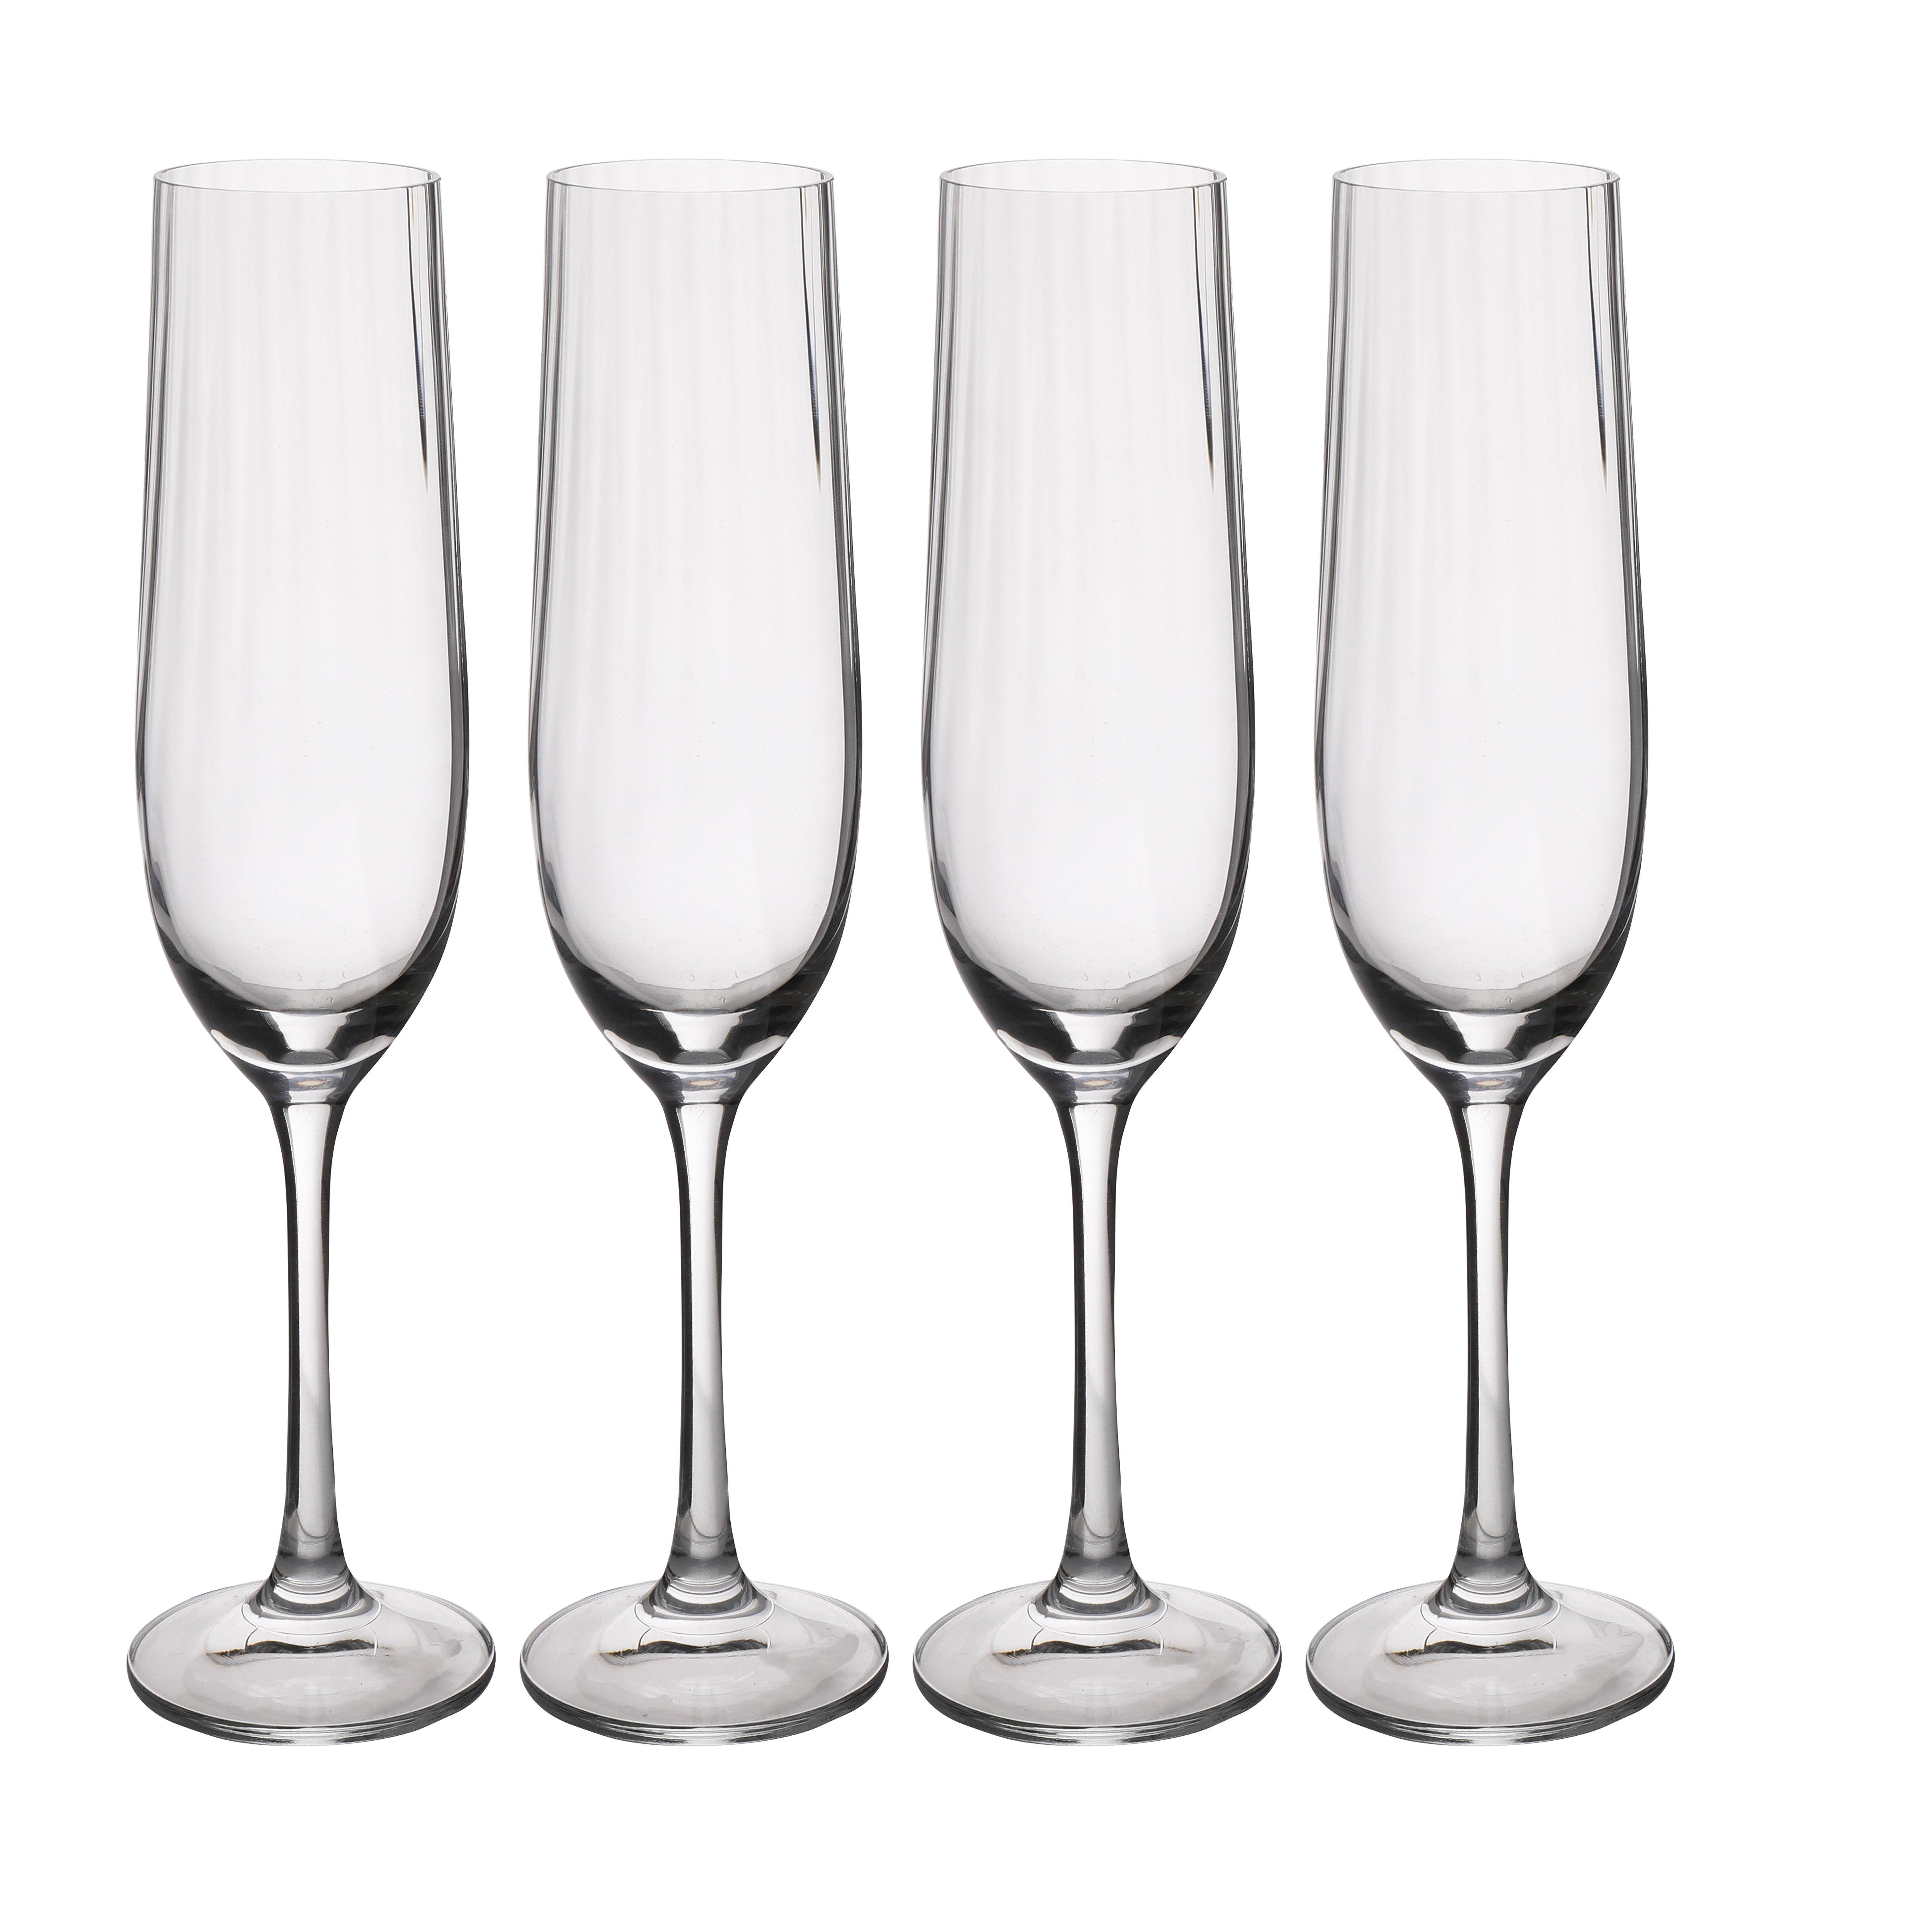 Treviso Crystal Champagne Flute Glasses, Set of 4, 190ml